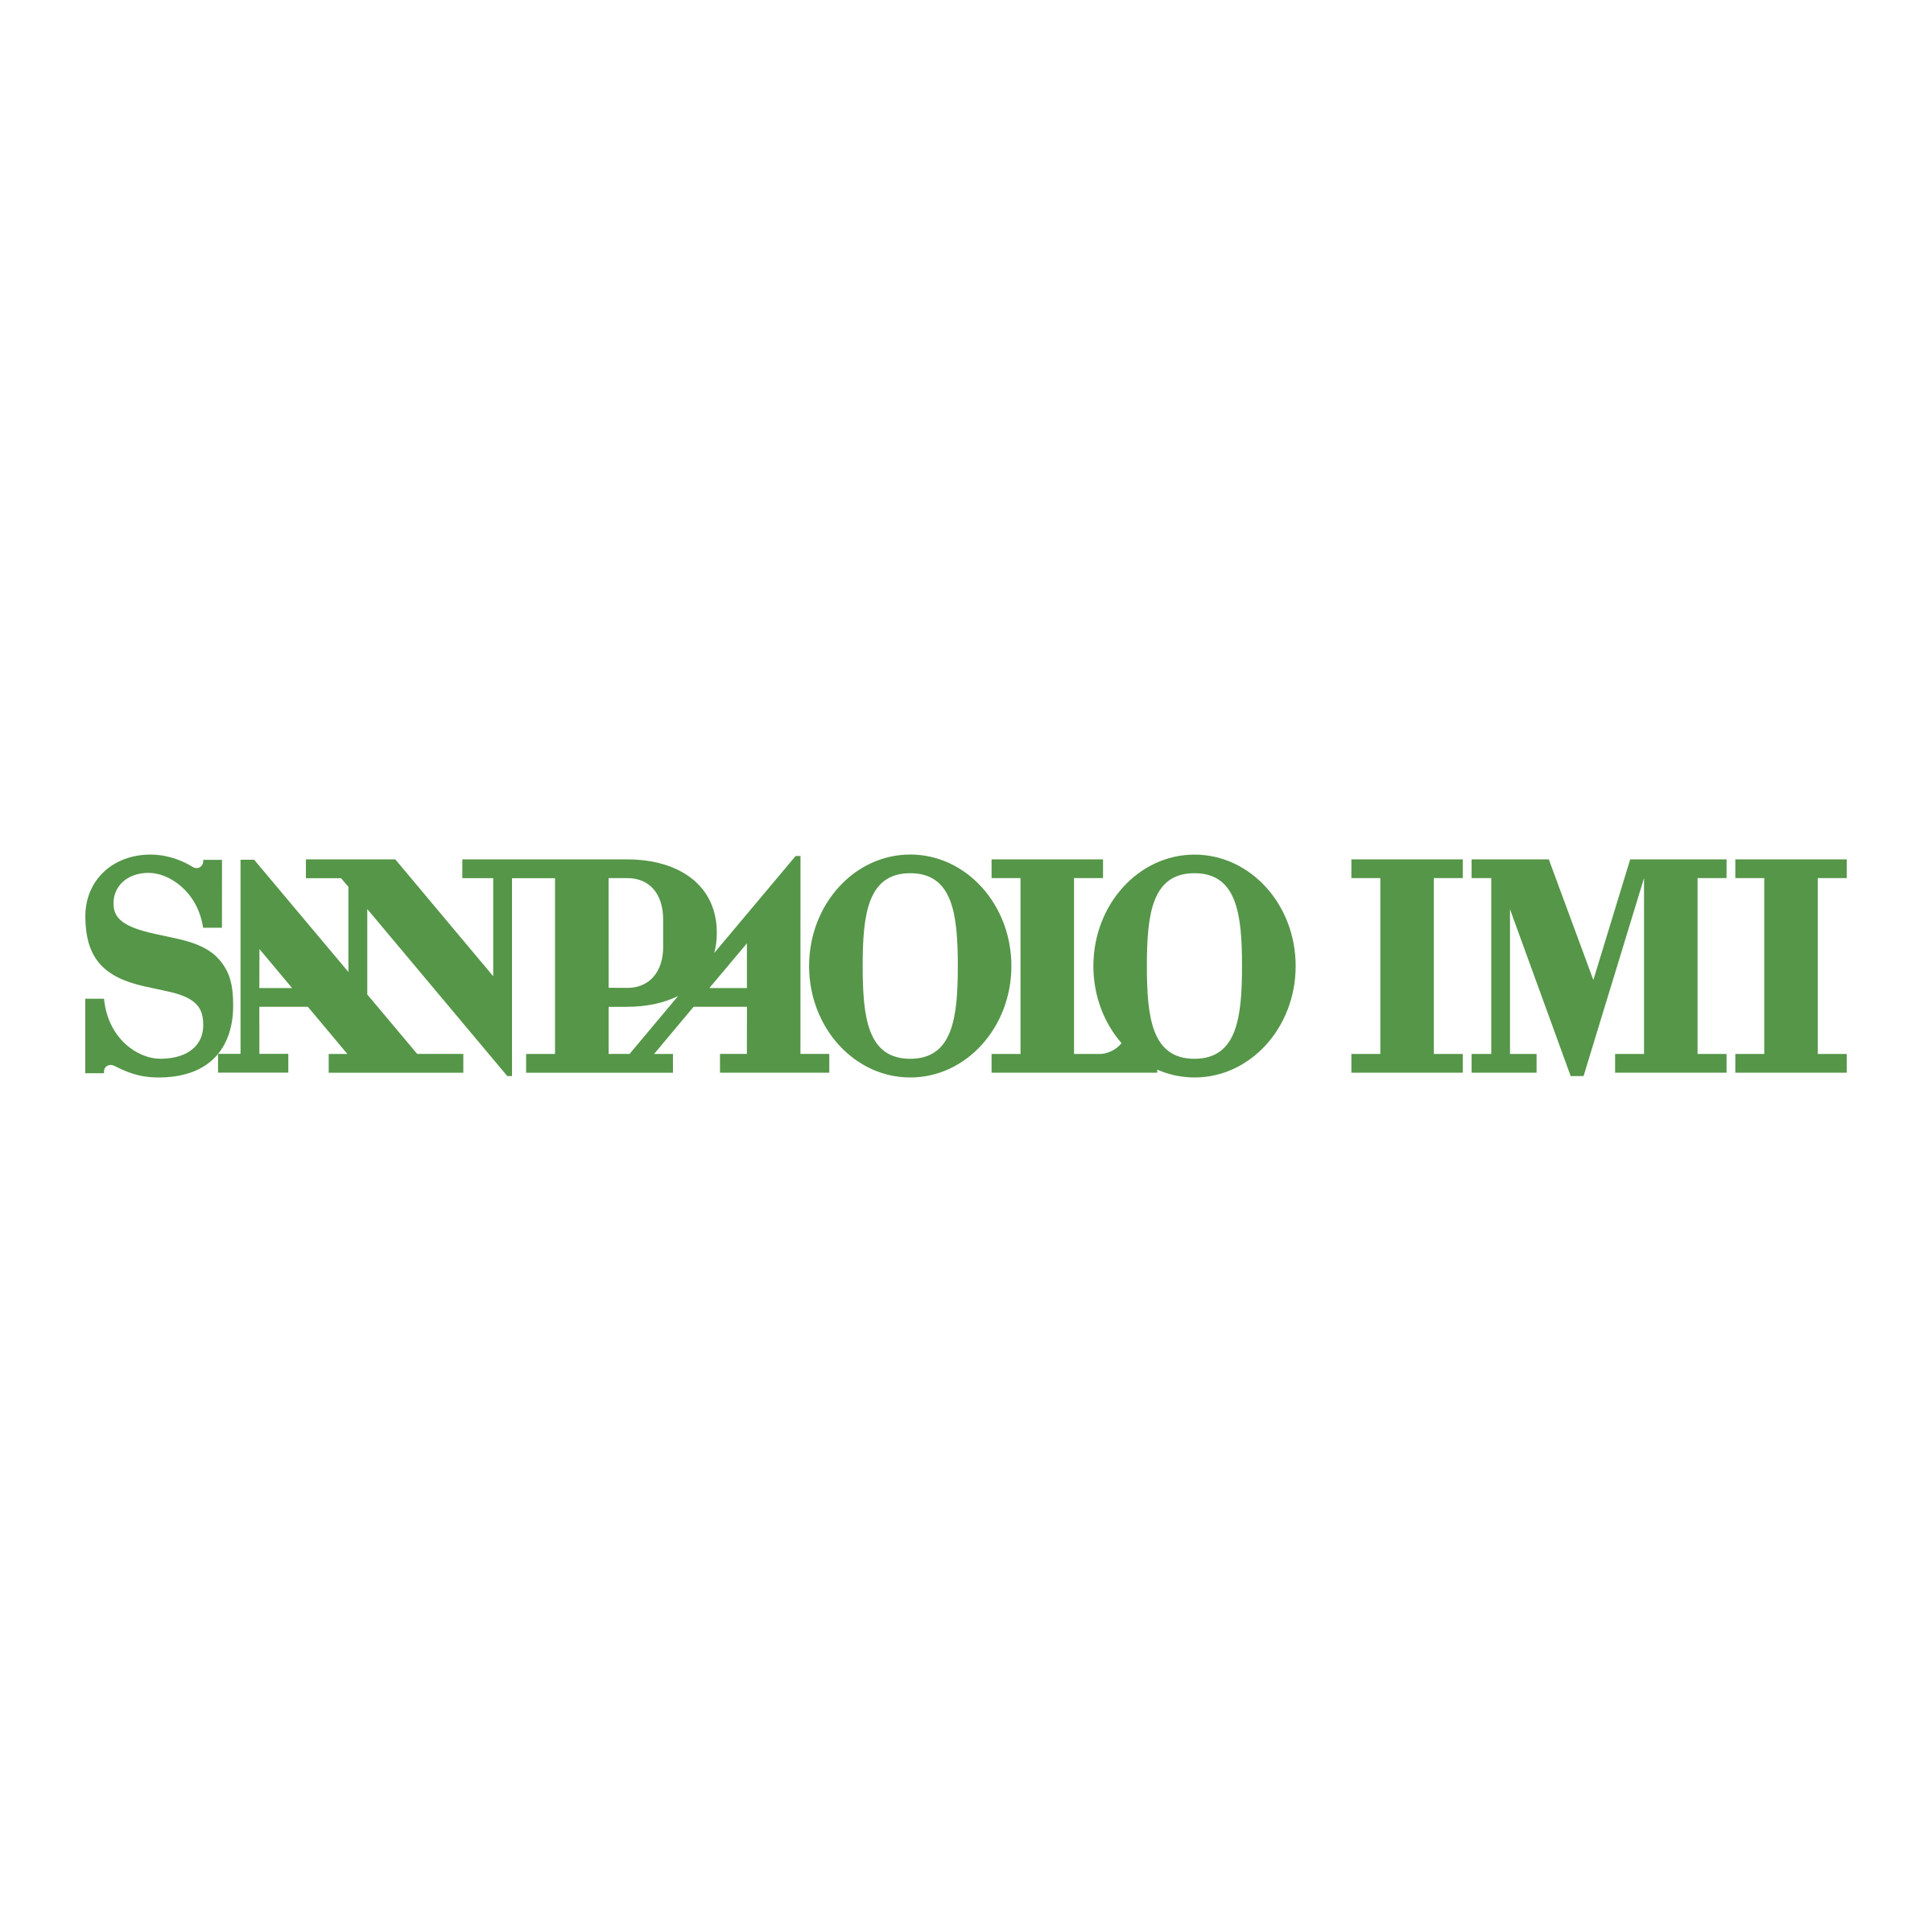 Imi Logo - SanPaolo IMI Logo PNG Transparent & SVG Vector - Freebie Supply